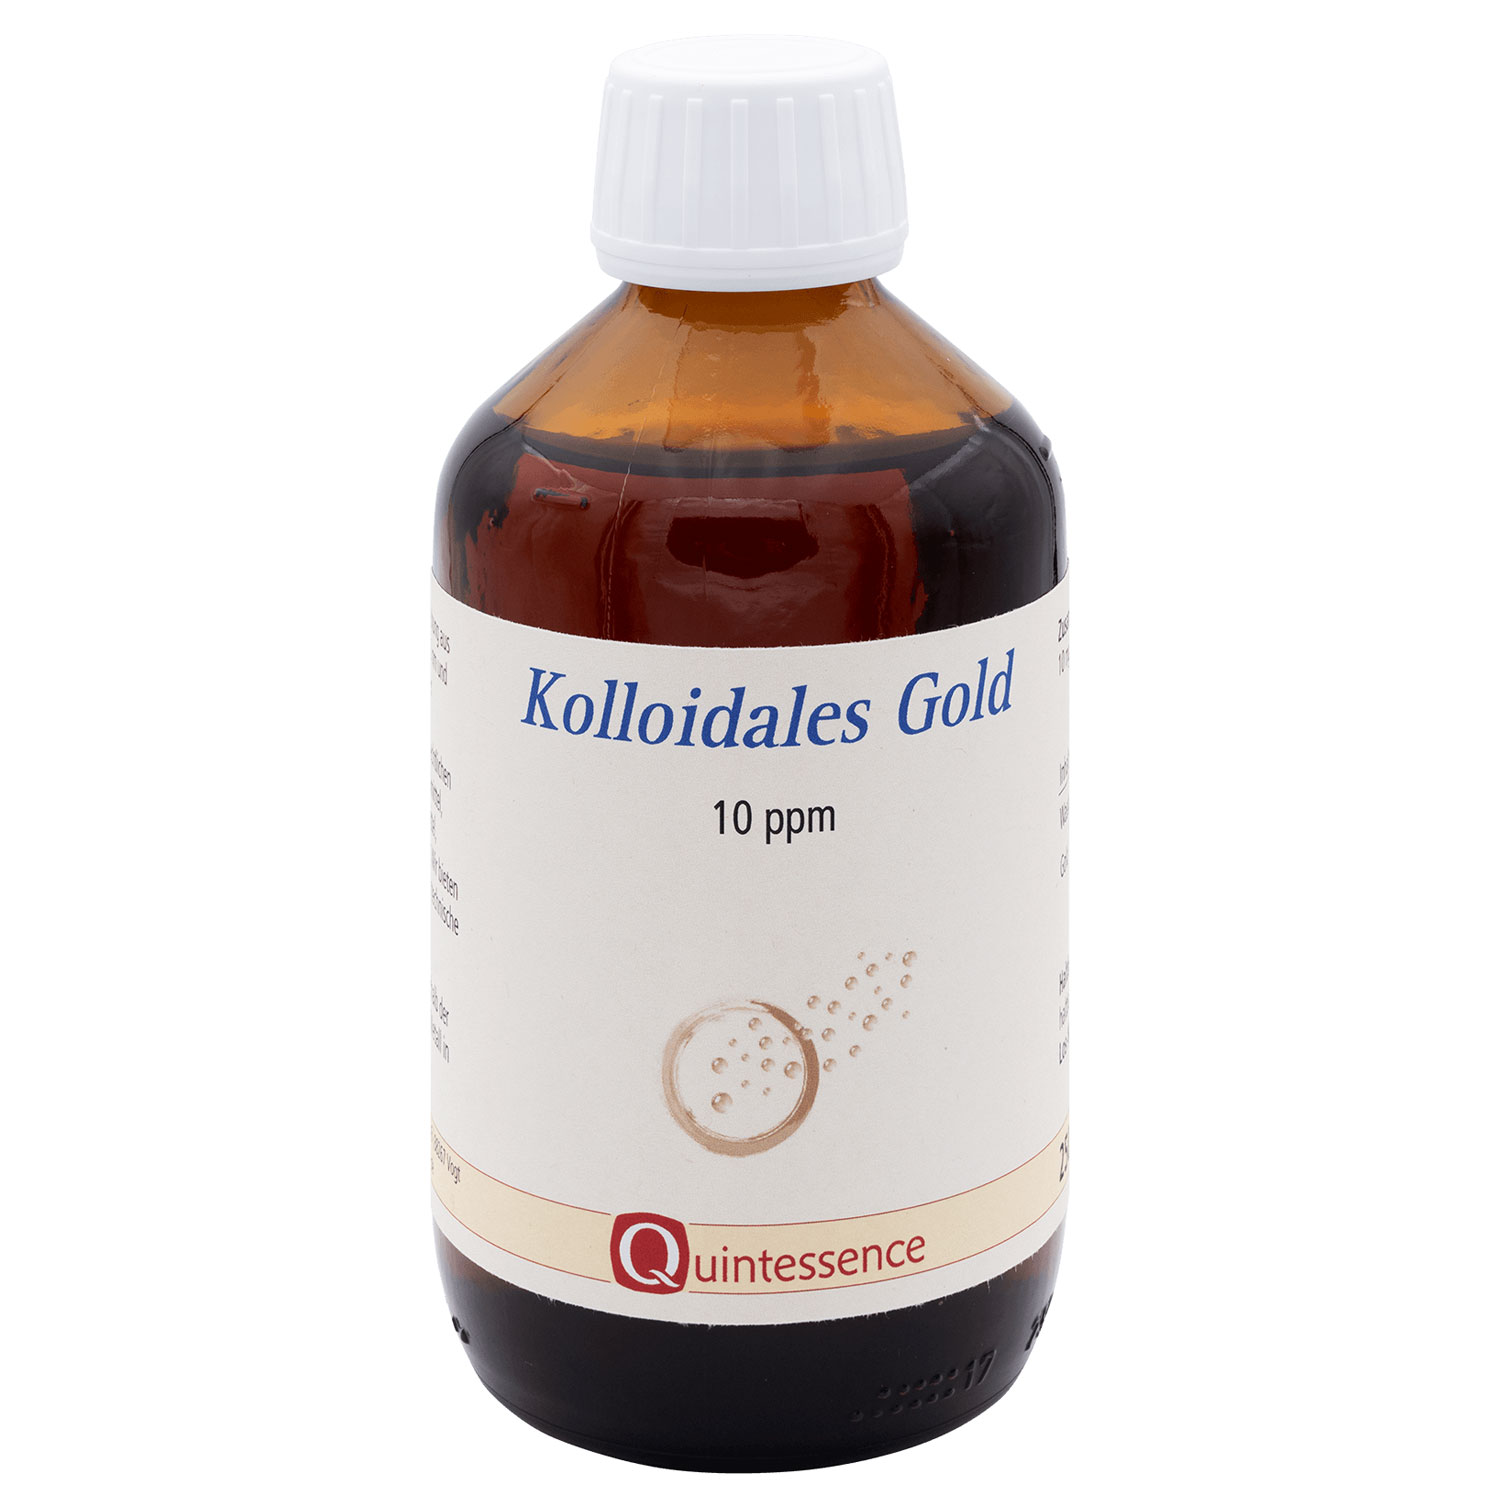 Kolloidales Gold 10 ppm, 250 ml von Quintessence - 250 ml